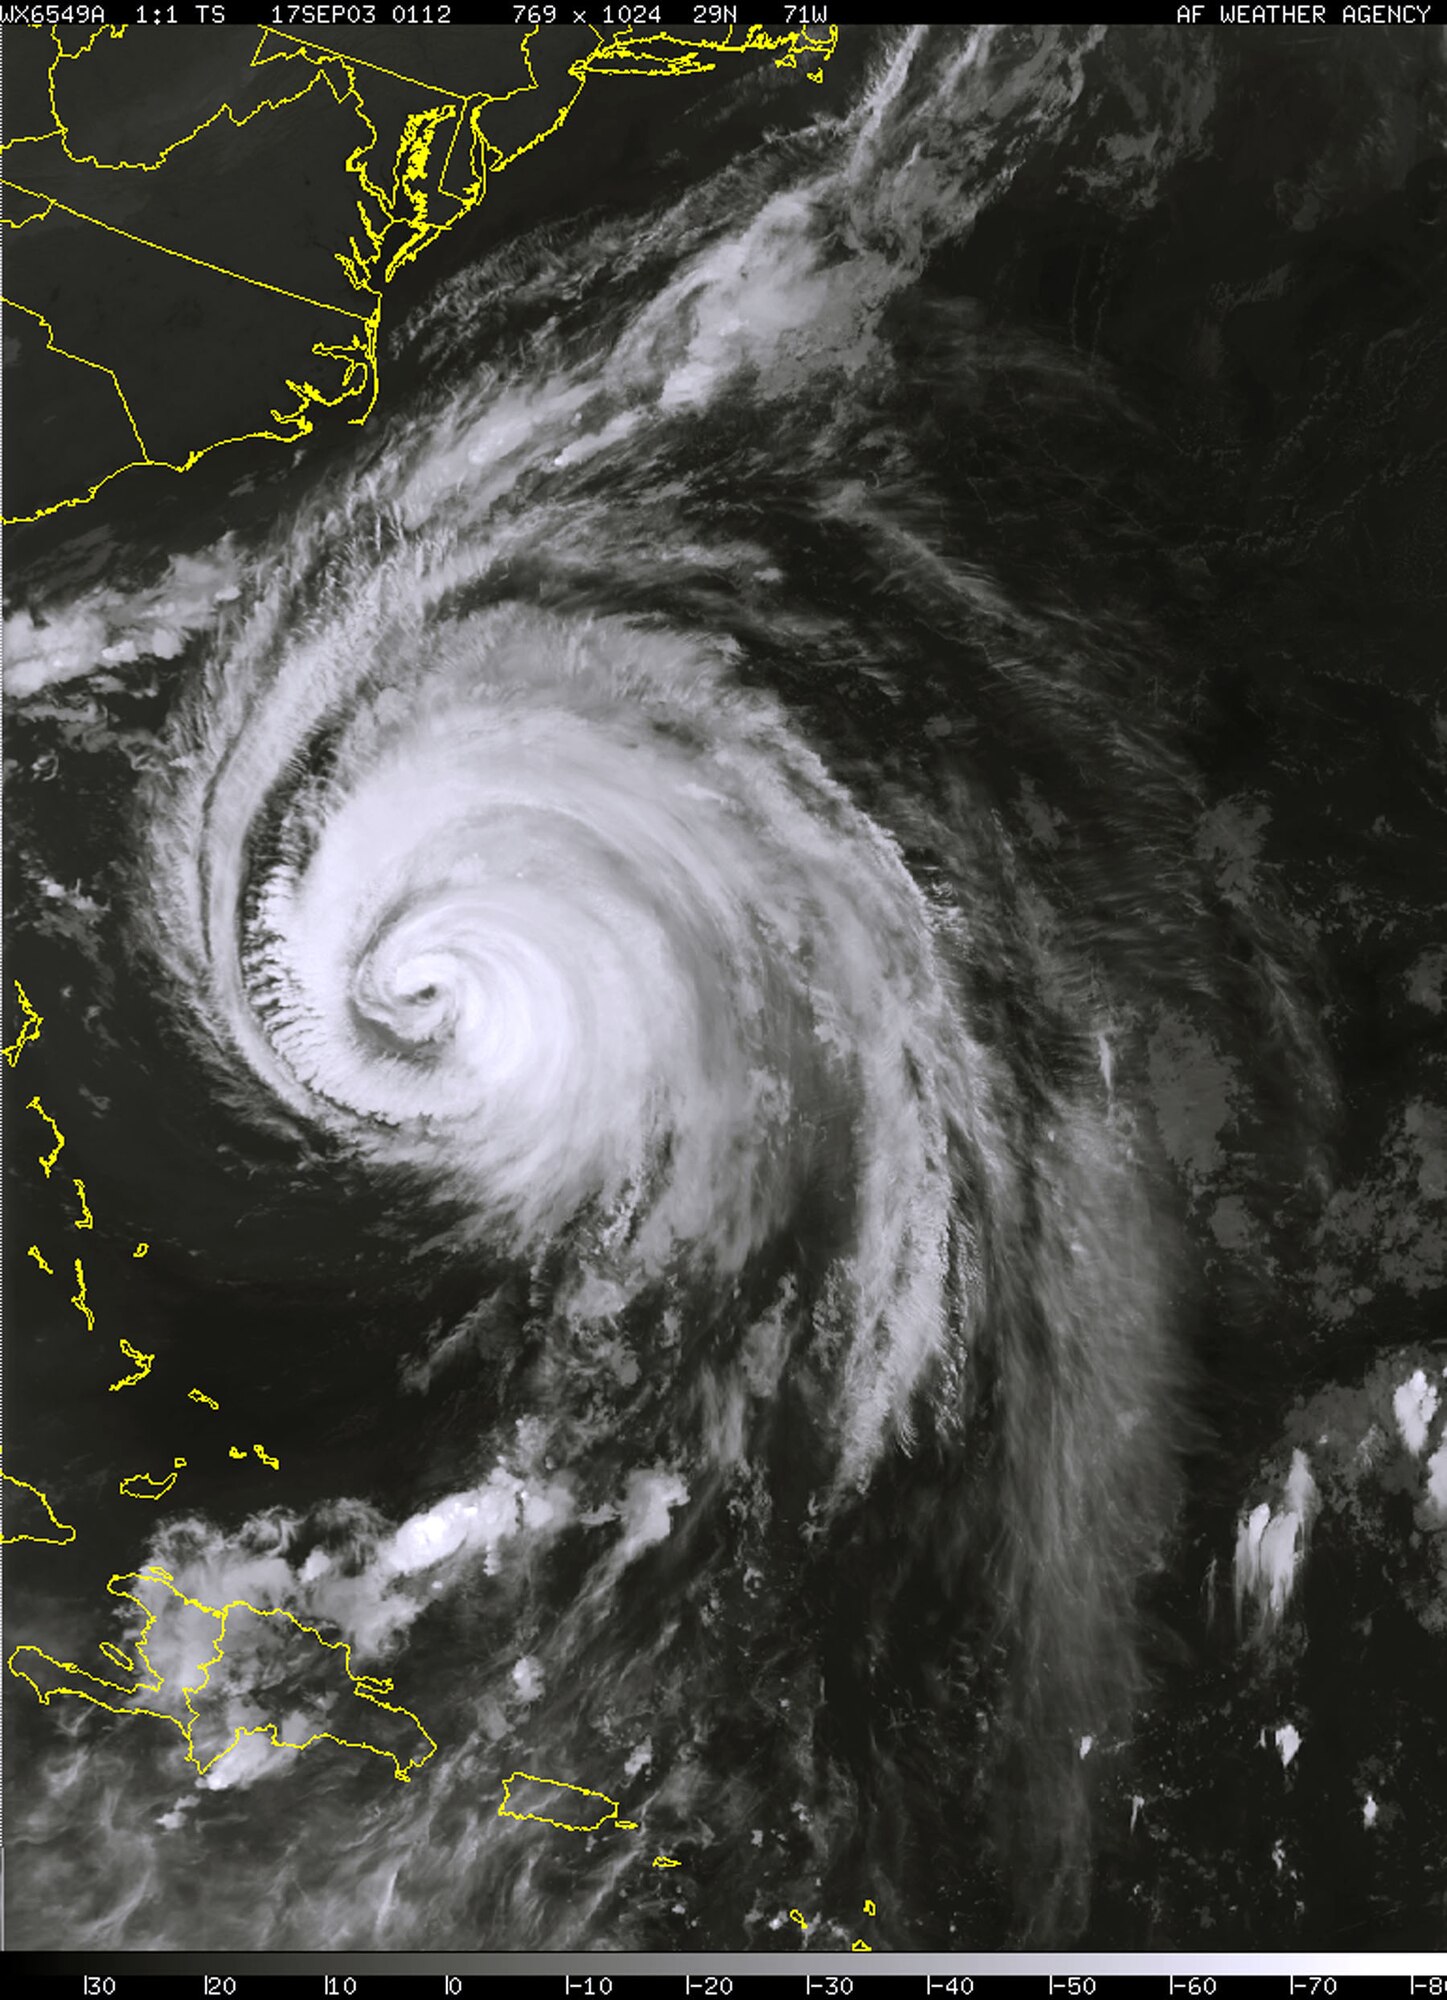 SATELLITE IMAGE -- This infrared satellite image shows Hurricane Isabel on Sept. 17.  (Courtesy image)